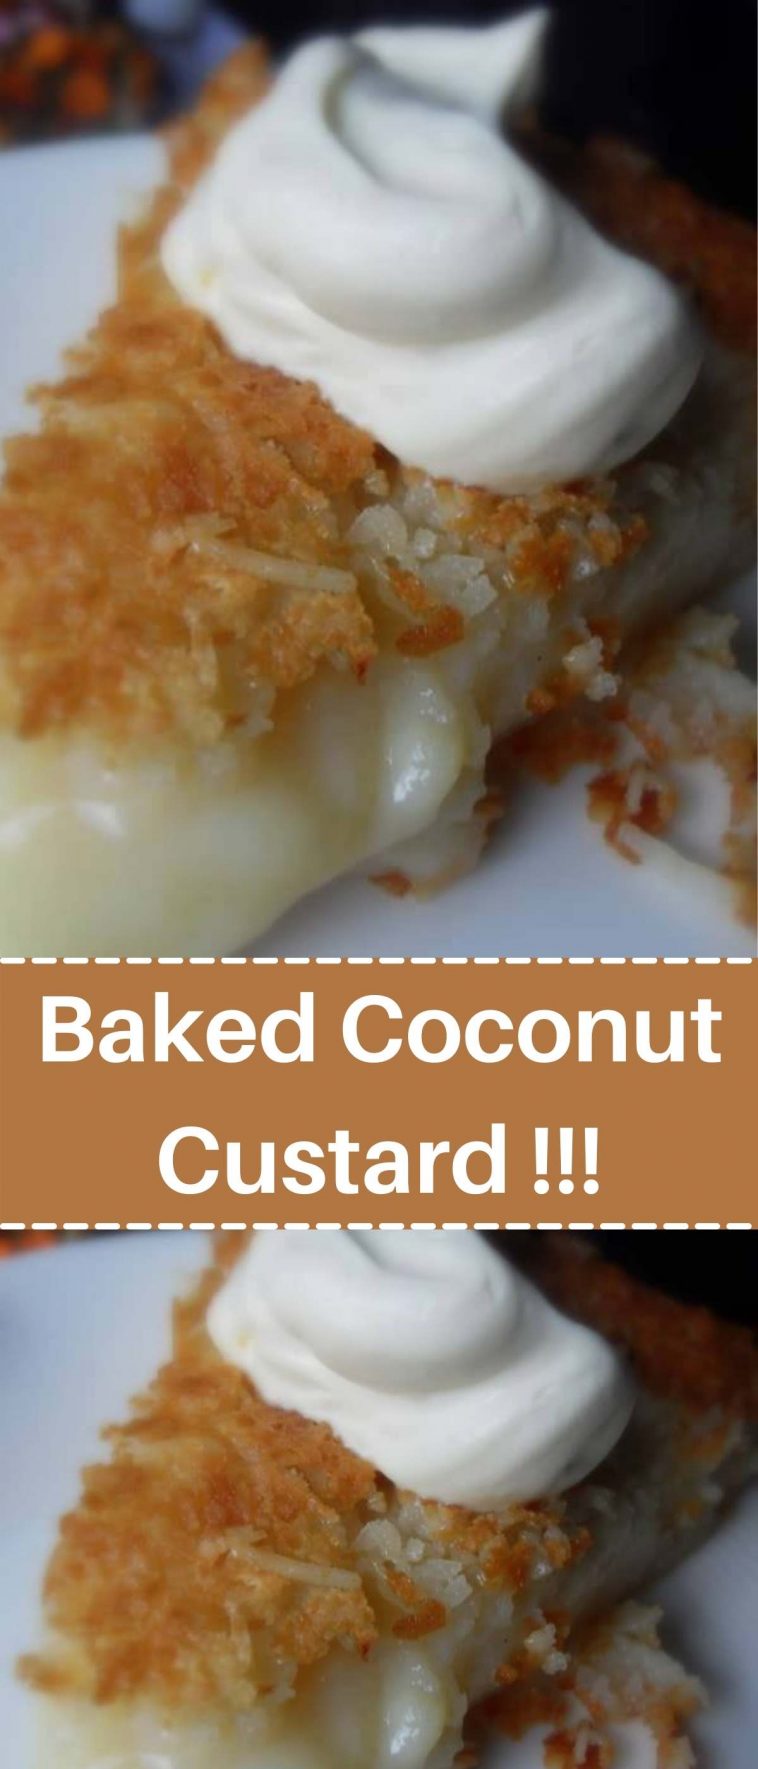 Baked Coconut Custard !!!